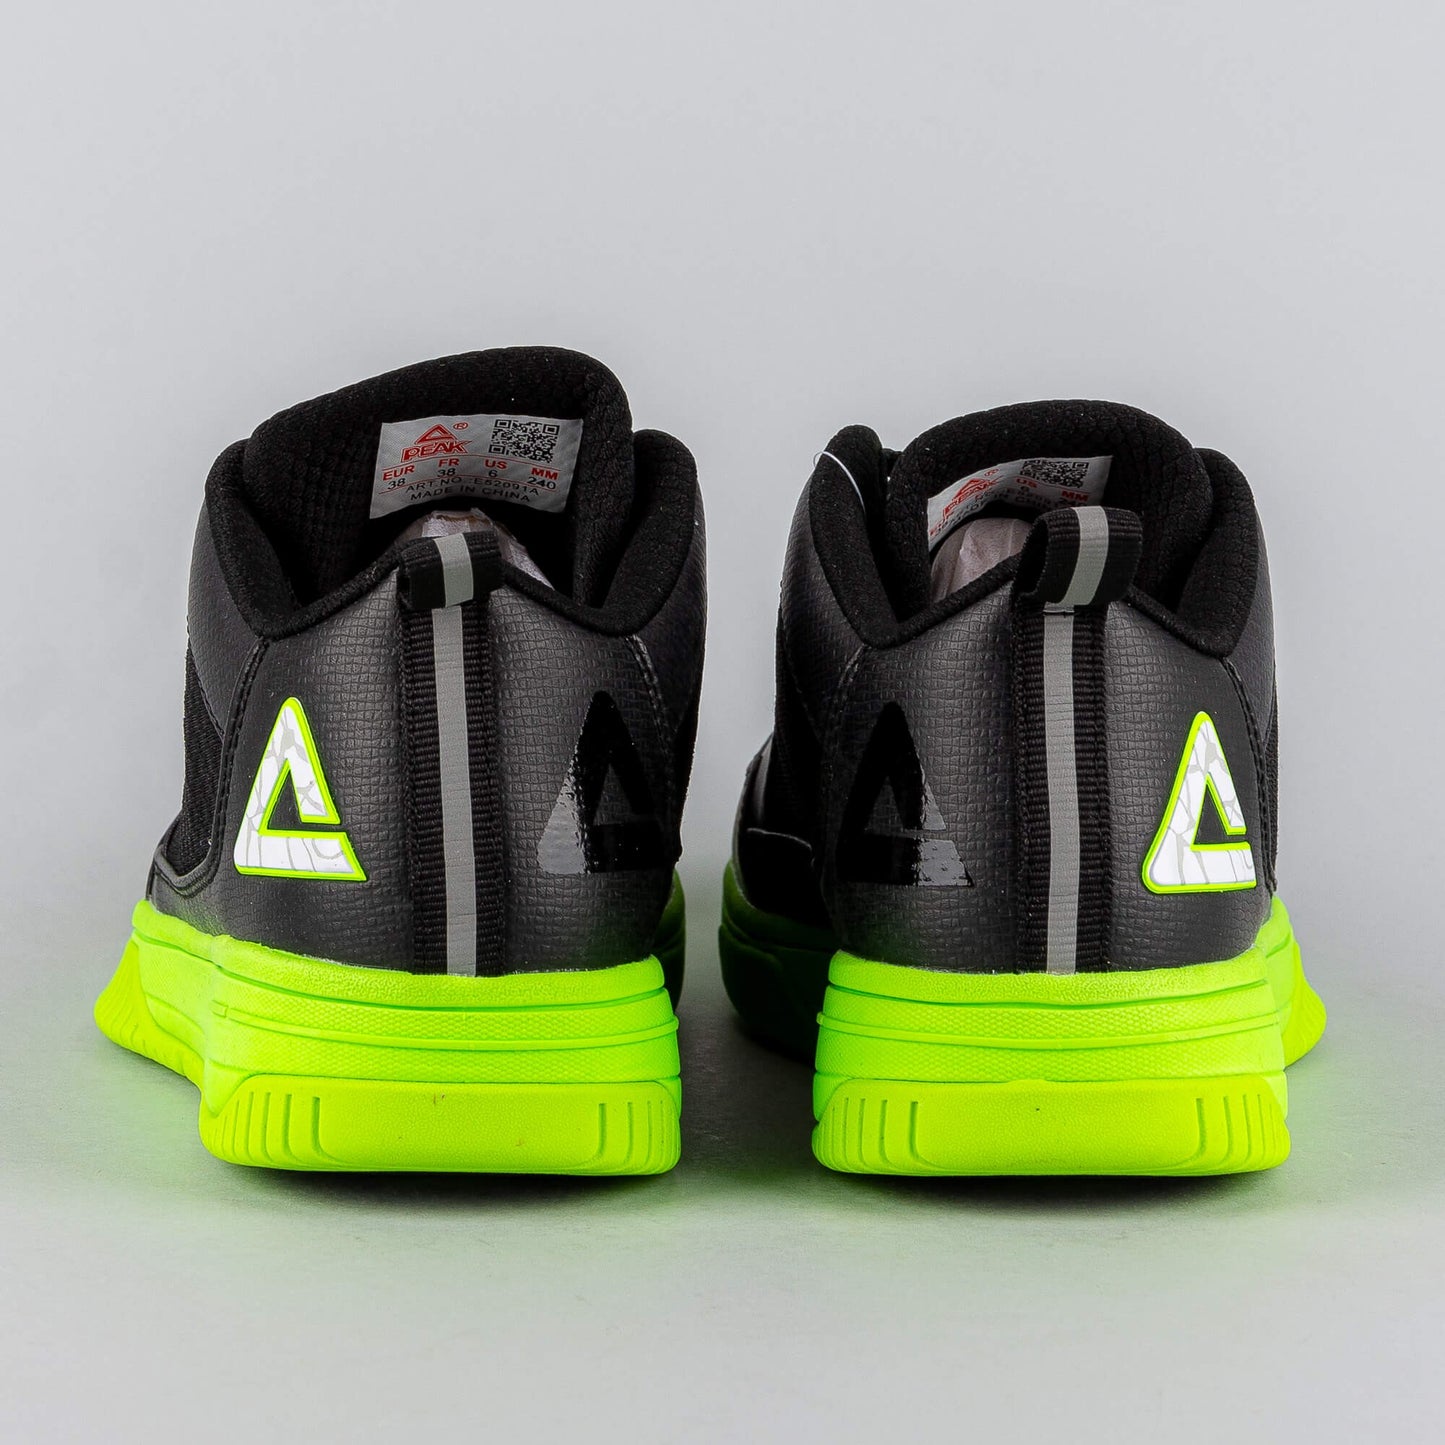 Peak Basketball Shoes Black/Fluorescent Green